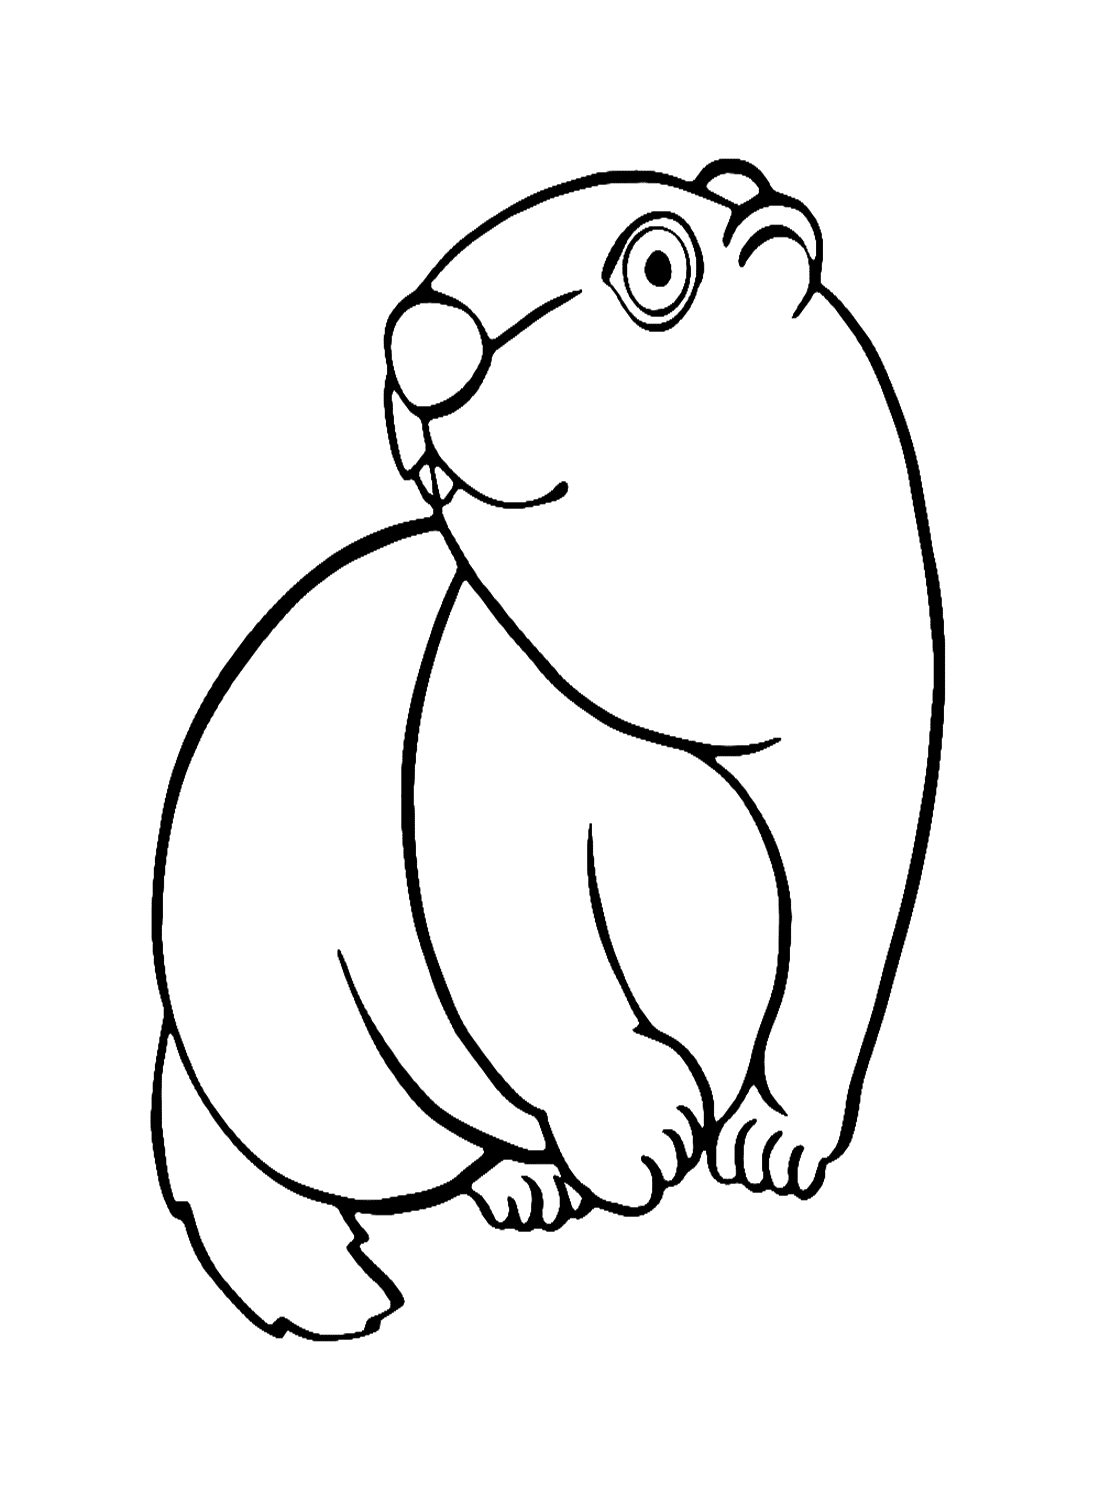 Adorável Marmota from Marmot